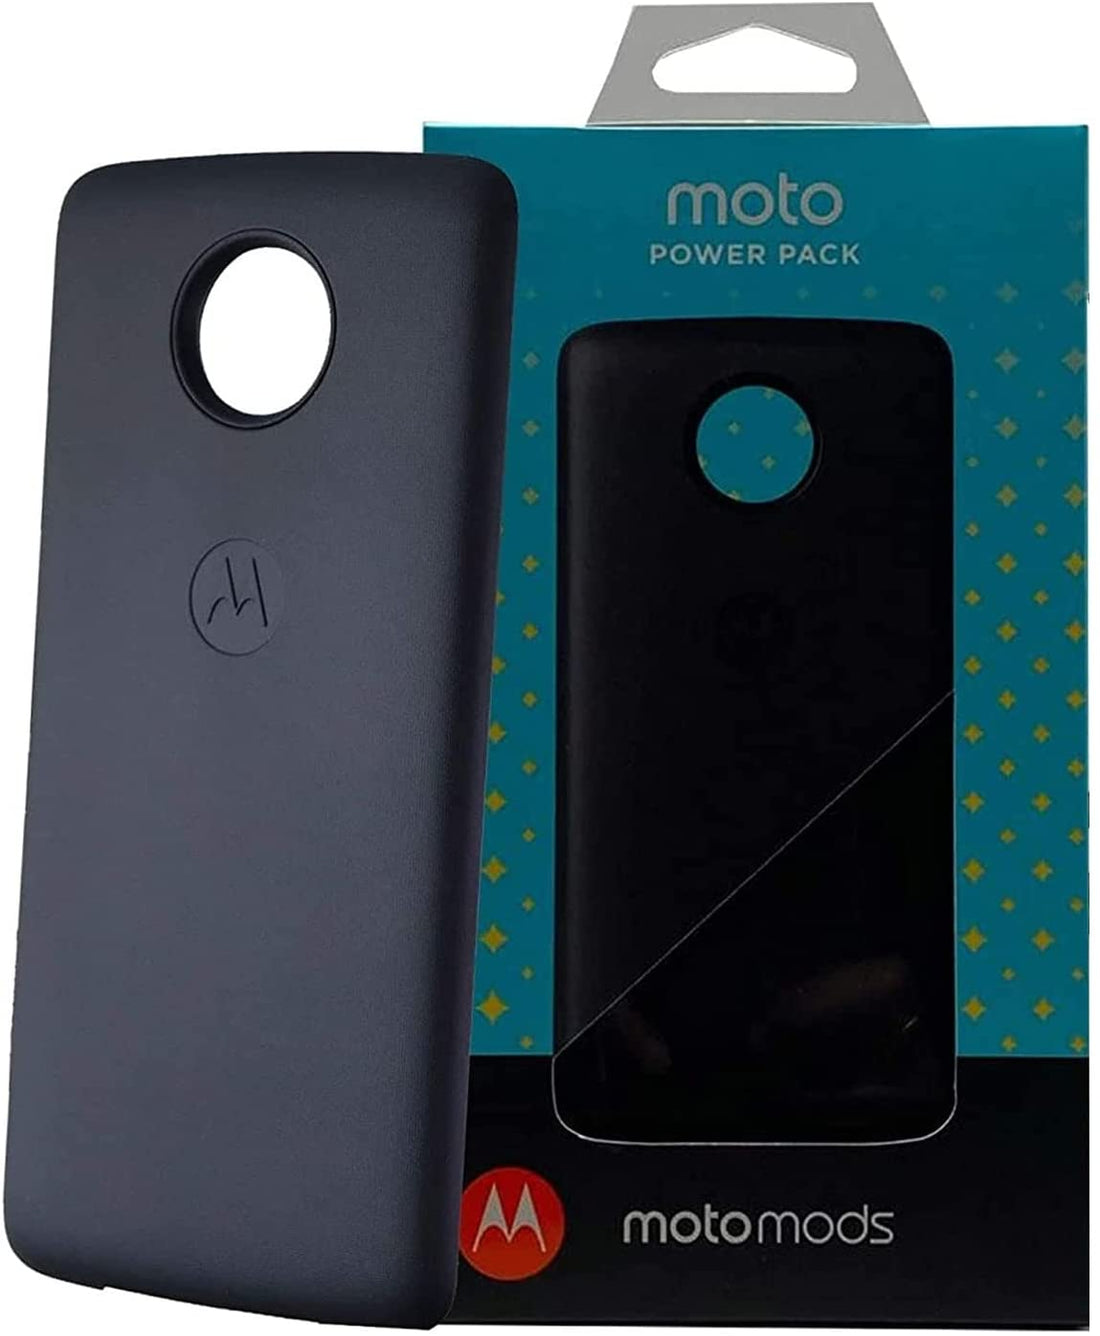 Motorola Moto Mods 2,220mAh Power Pack MD100B - Black (Refurbished)